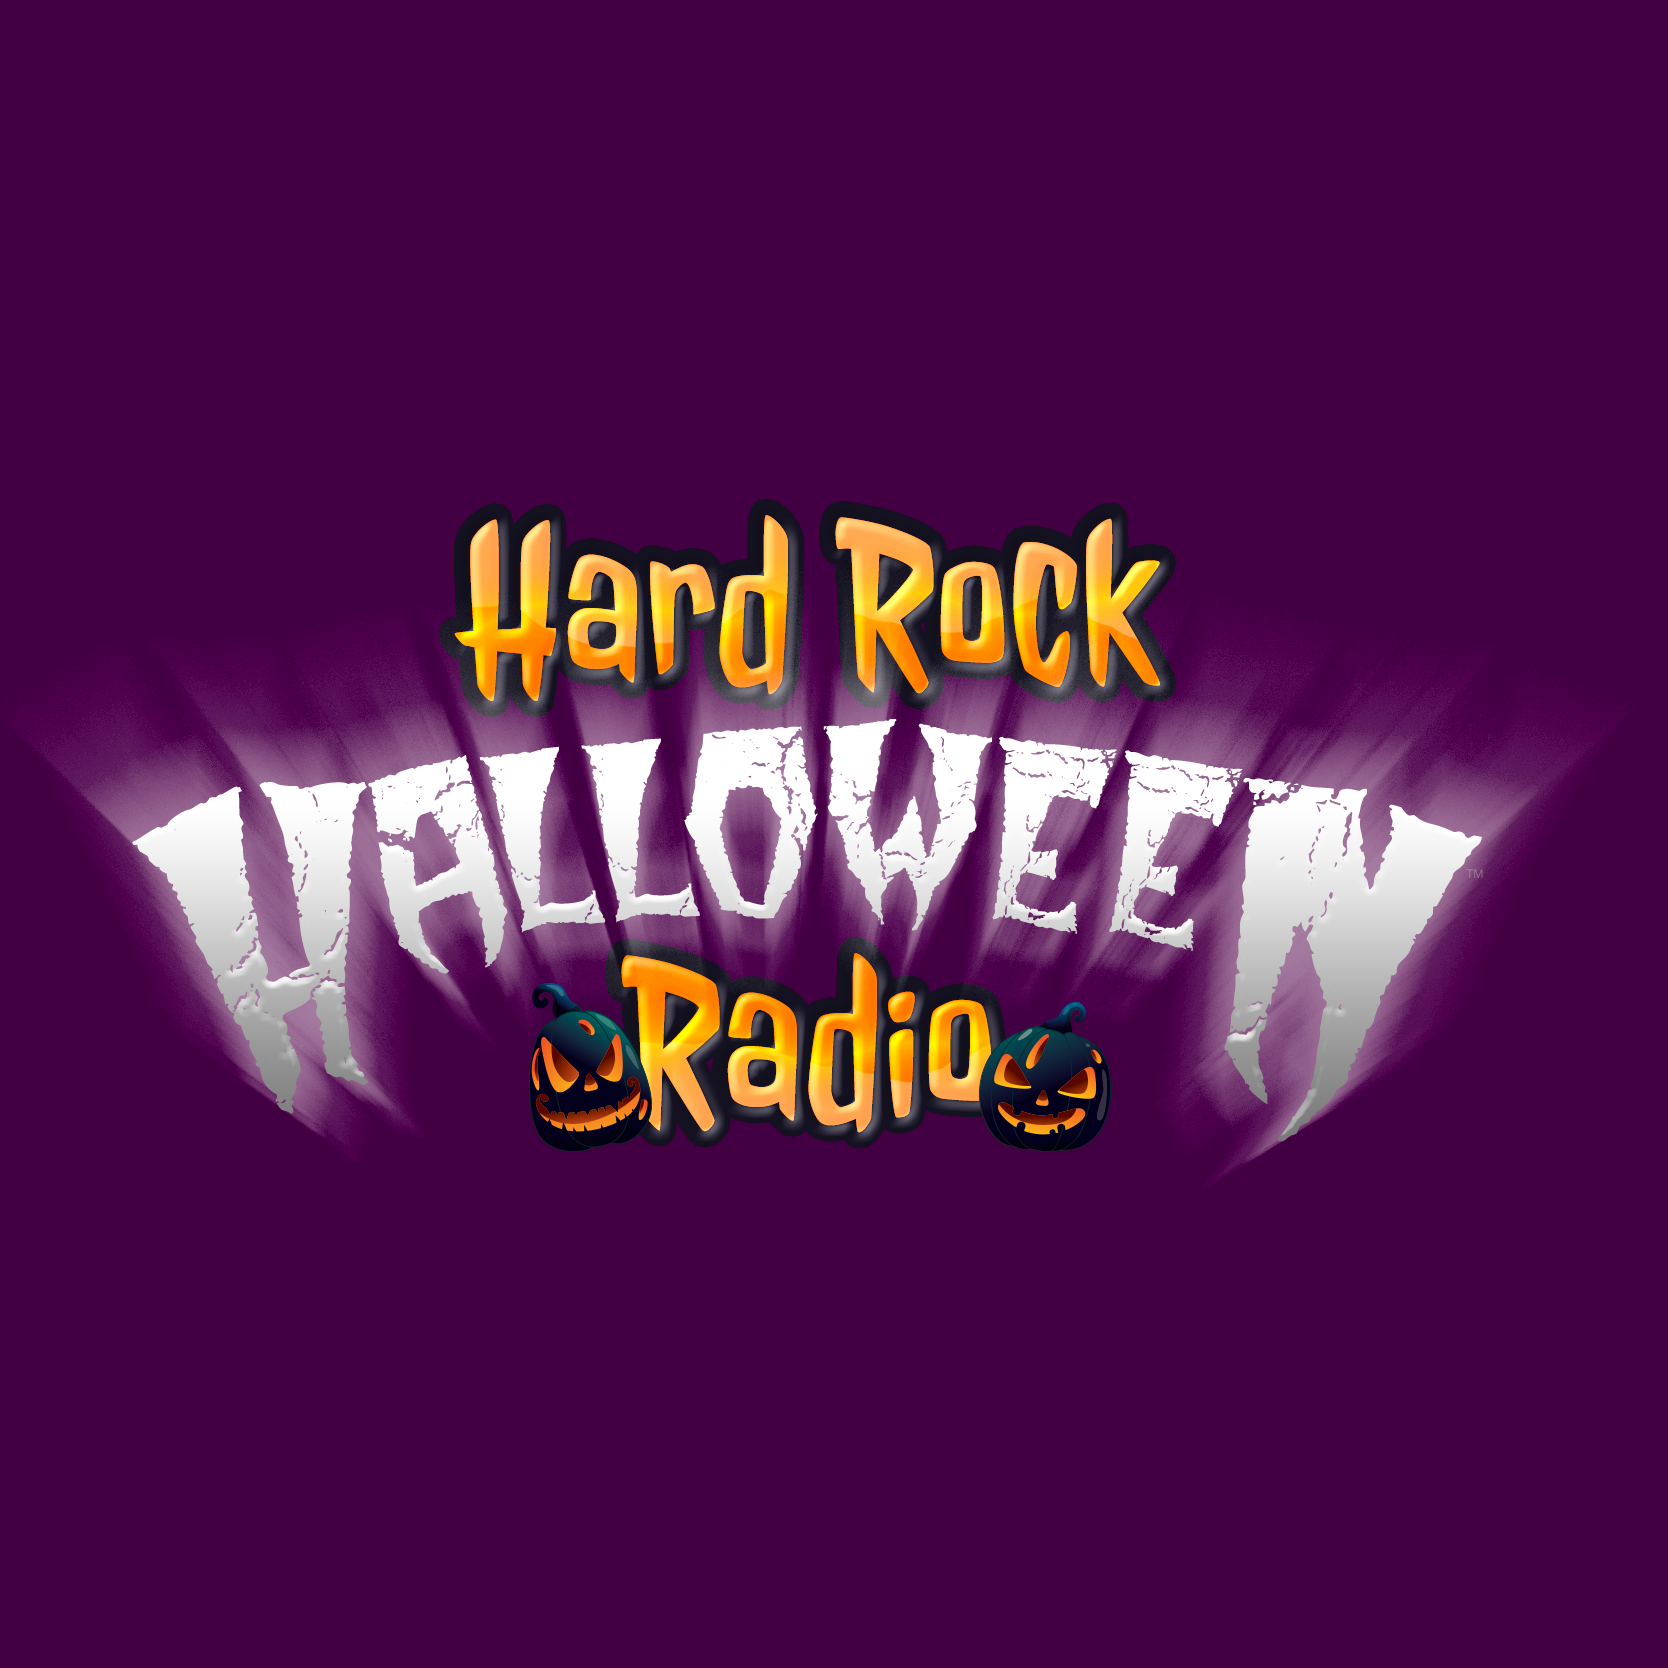 Art for Patreon by Hard Rock Halloween Radio